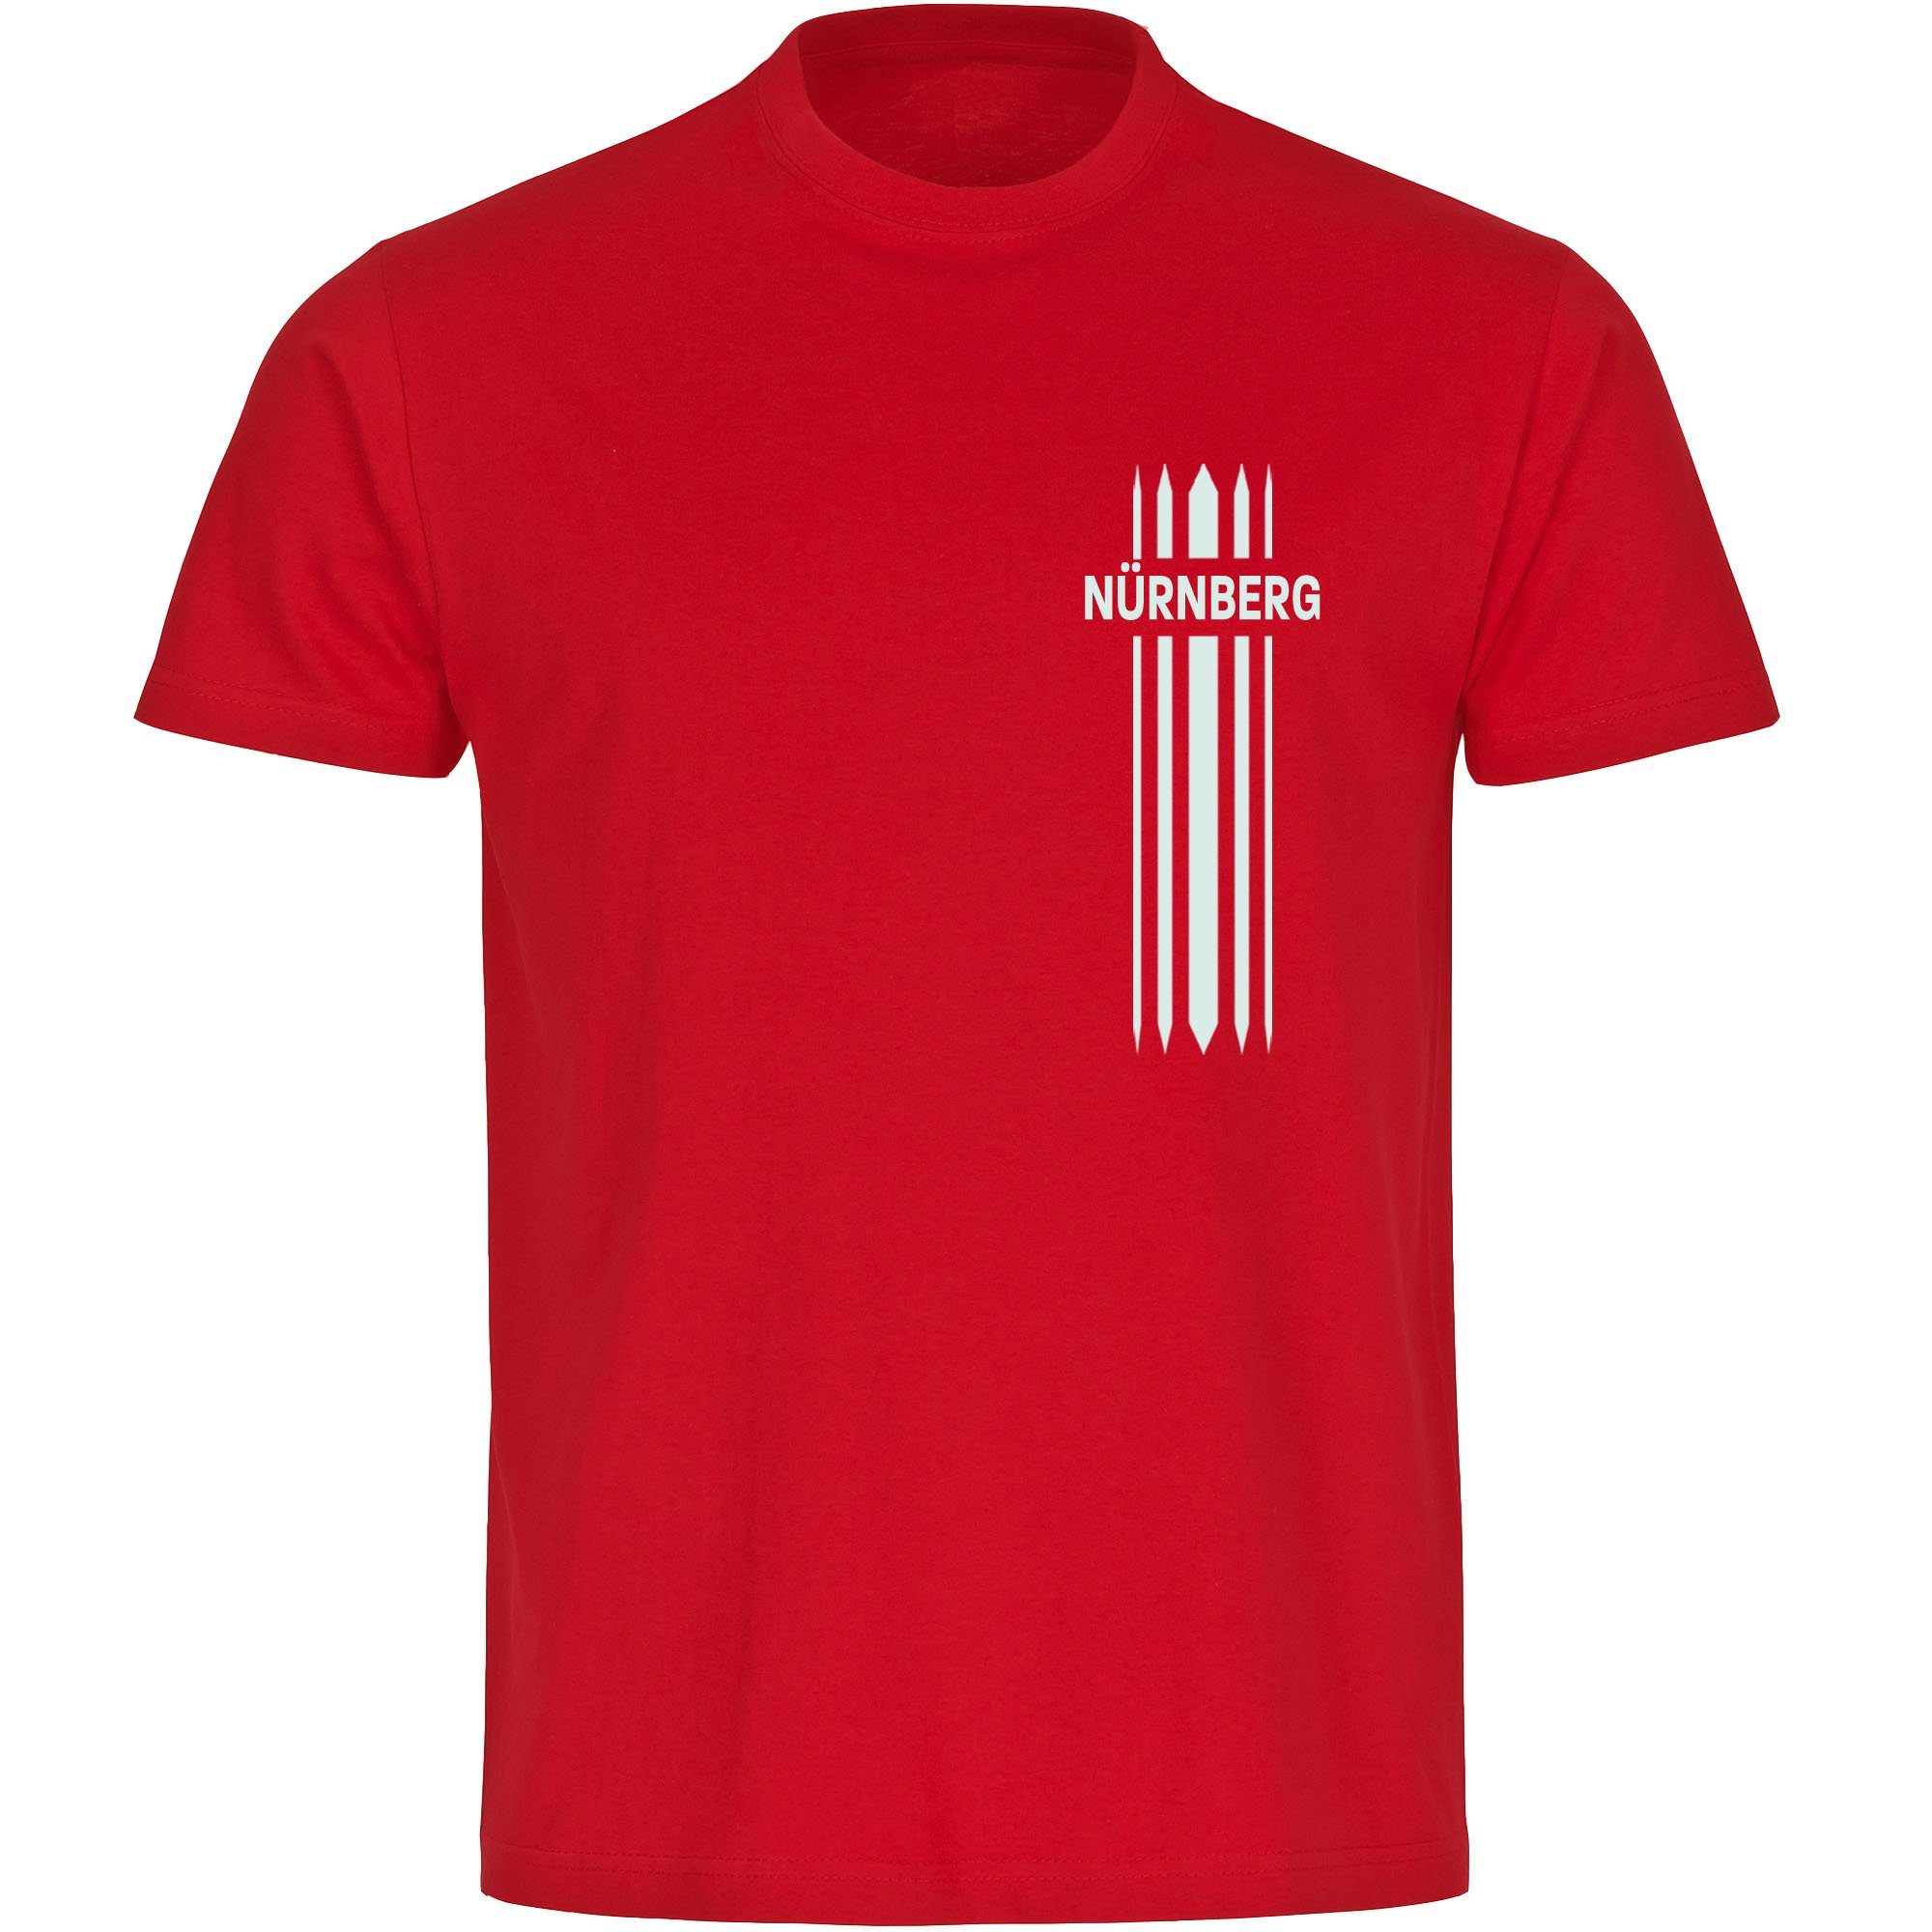 multifanshop T-Shirt Herren Nürnberg - Streifen - Männer